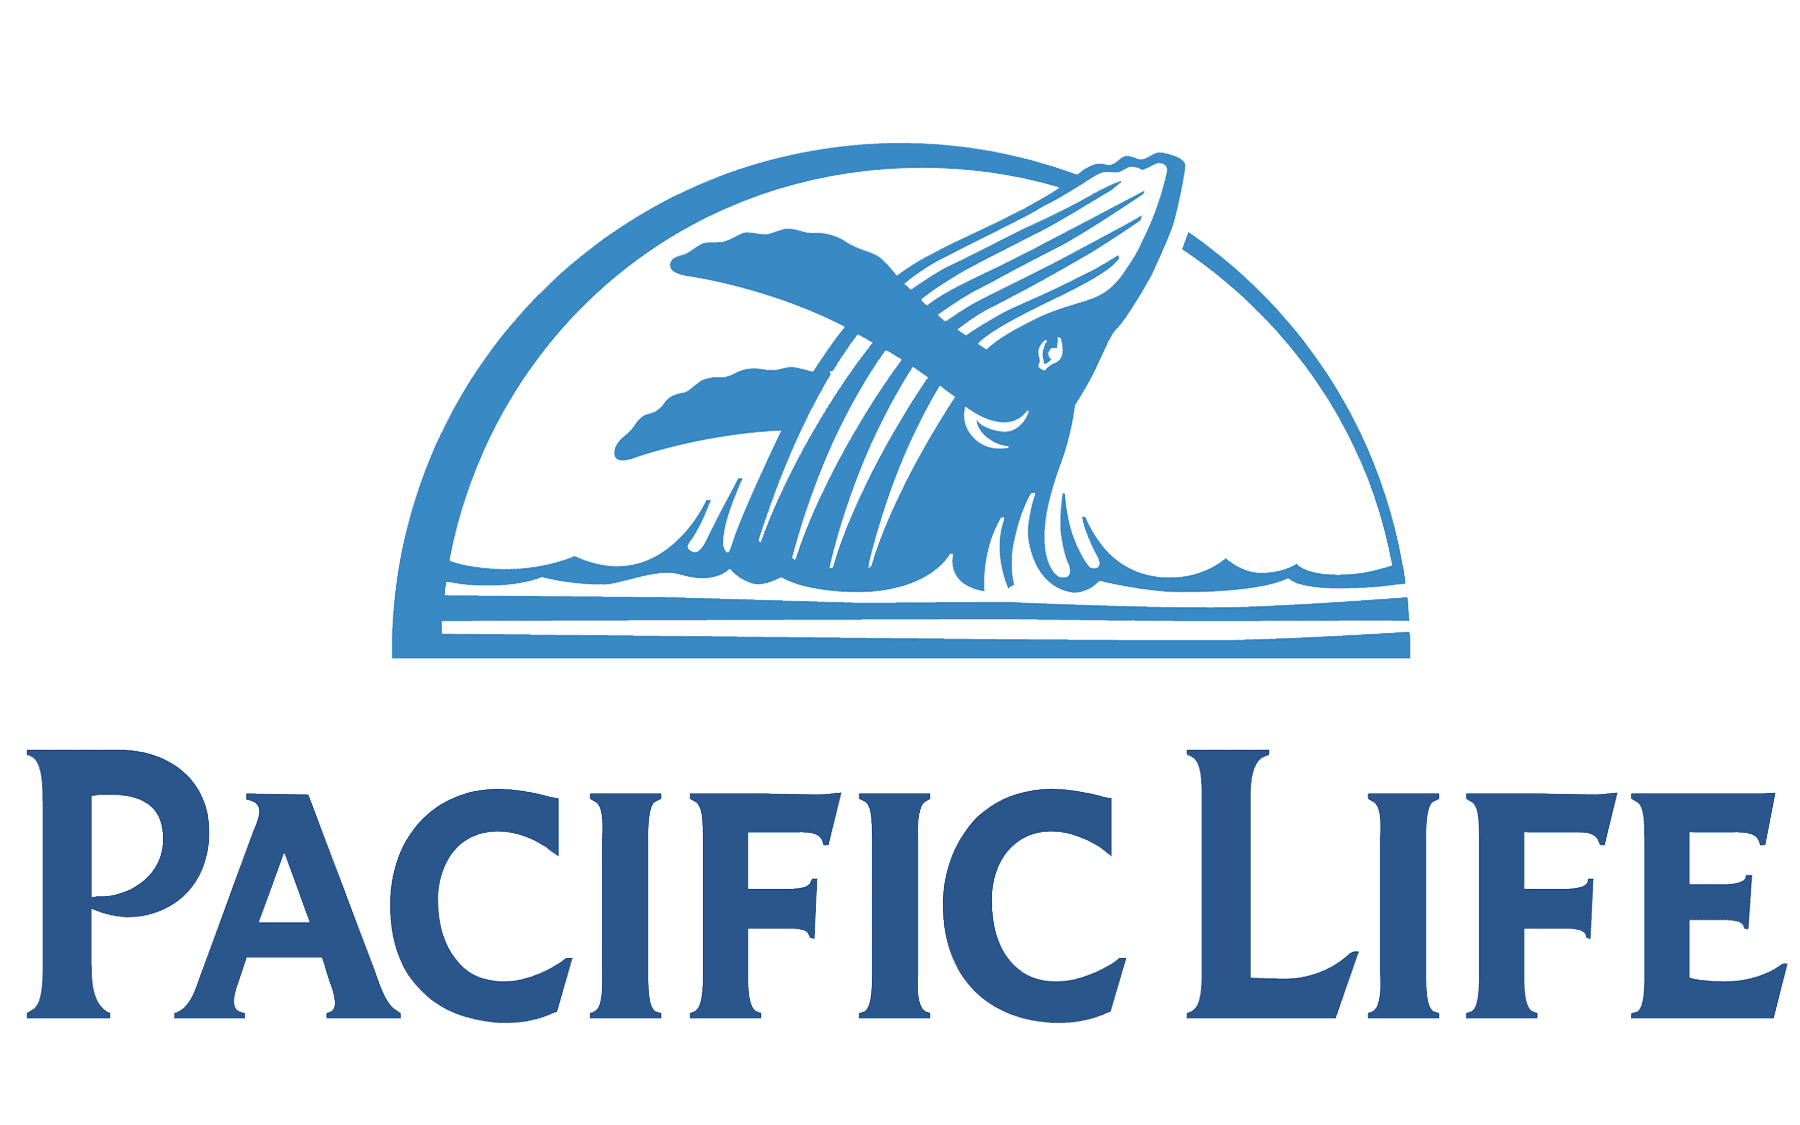 Pacific-Life-Logo